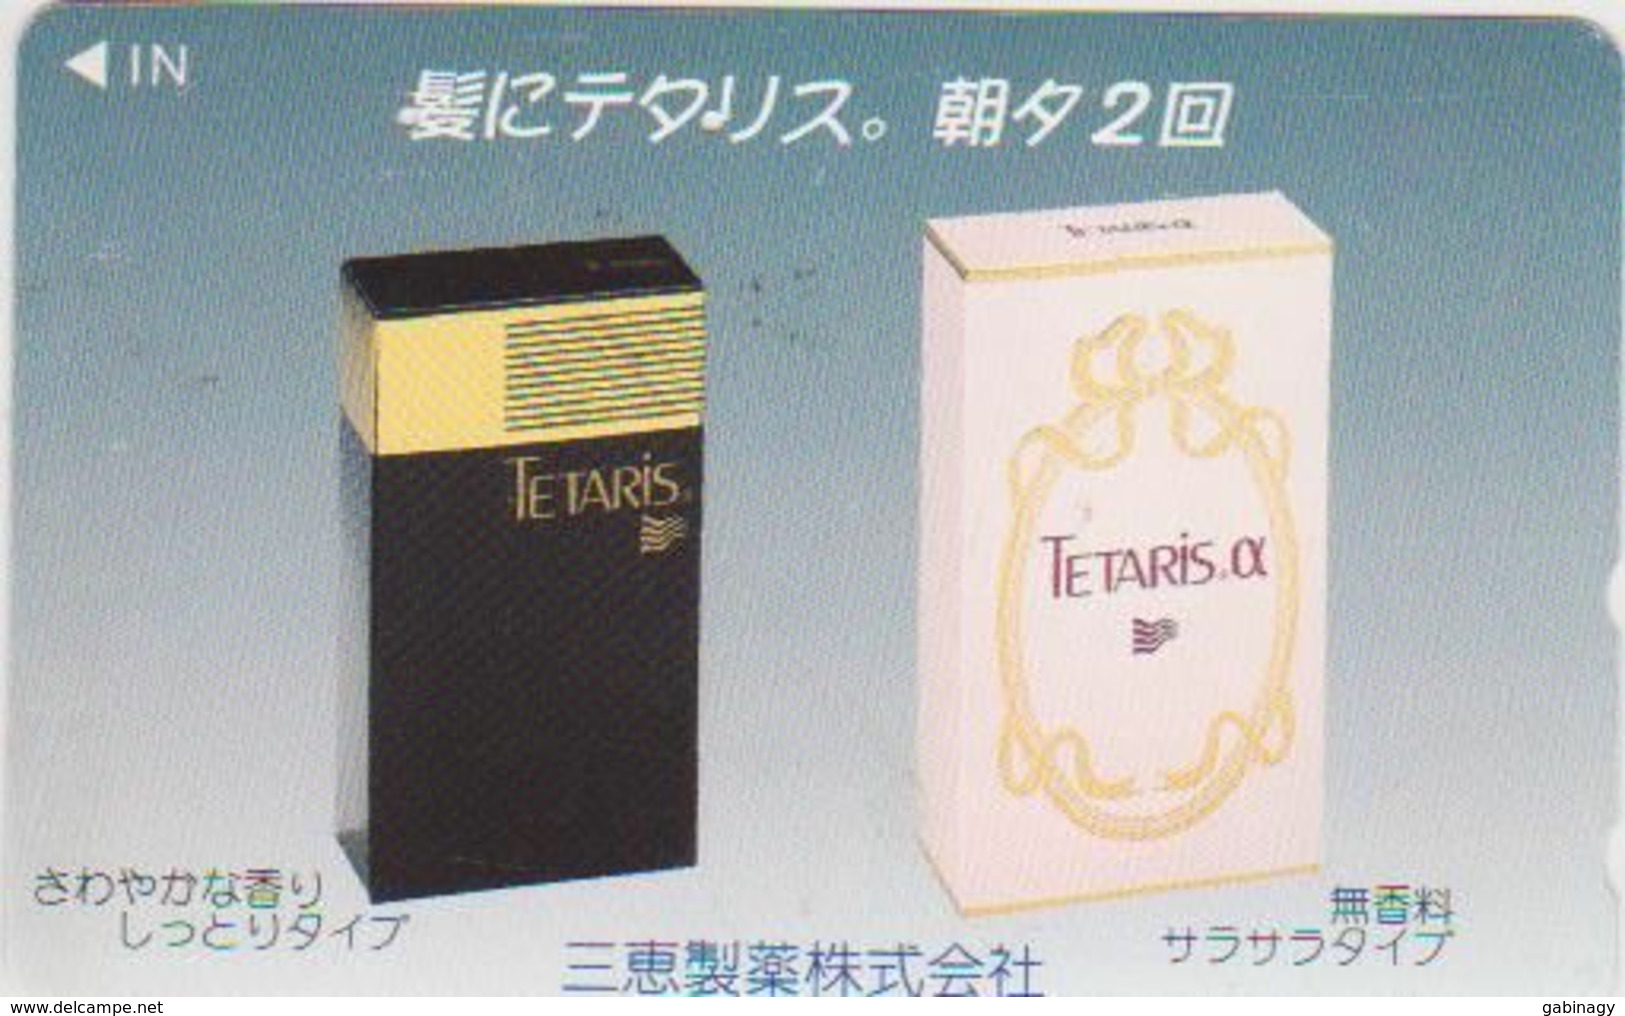 COSMETIC - JAPAN 007 - Tetaris - Perfume